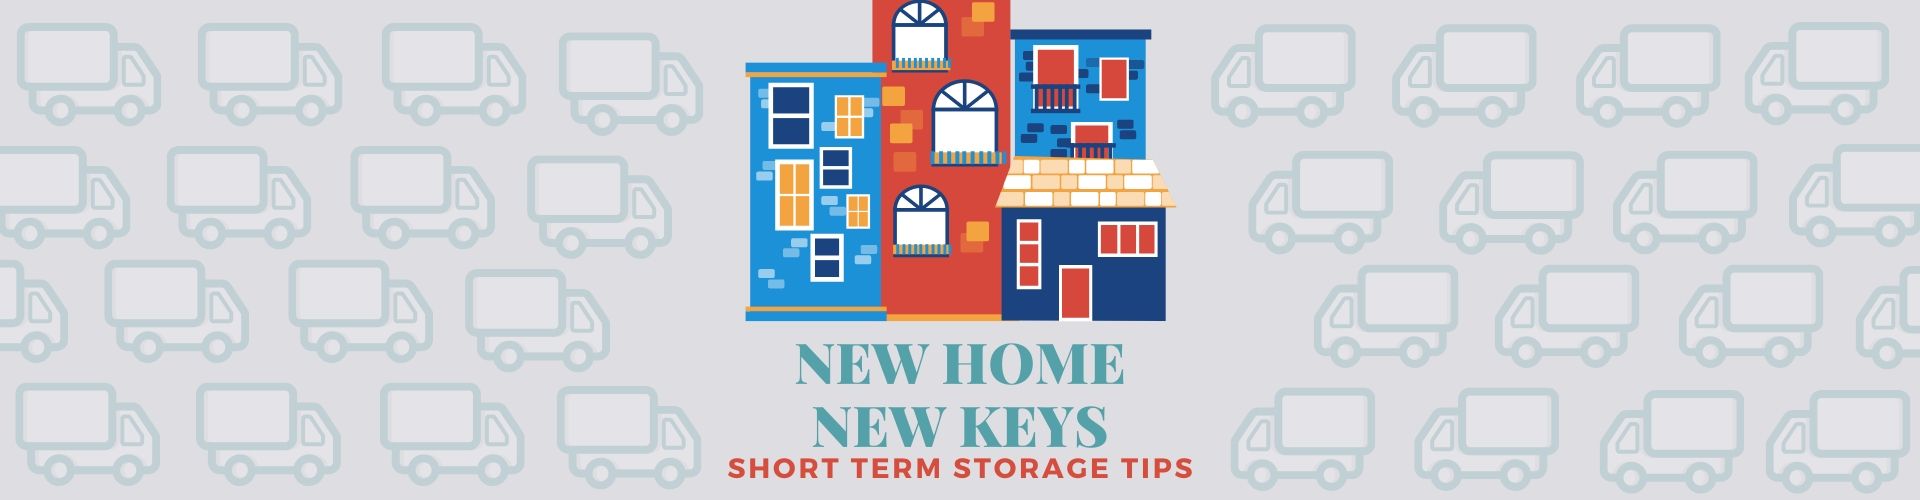 Short Term Storage To Help Around the House